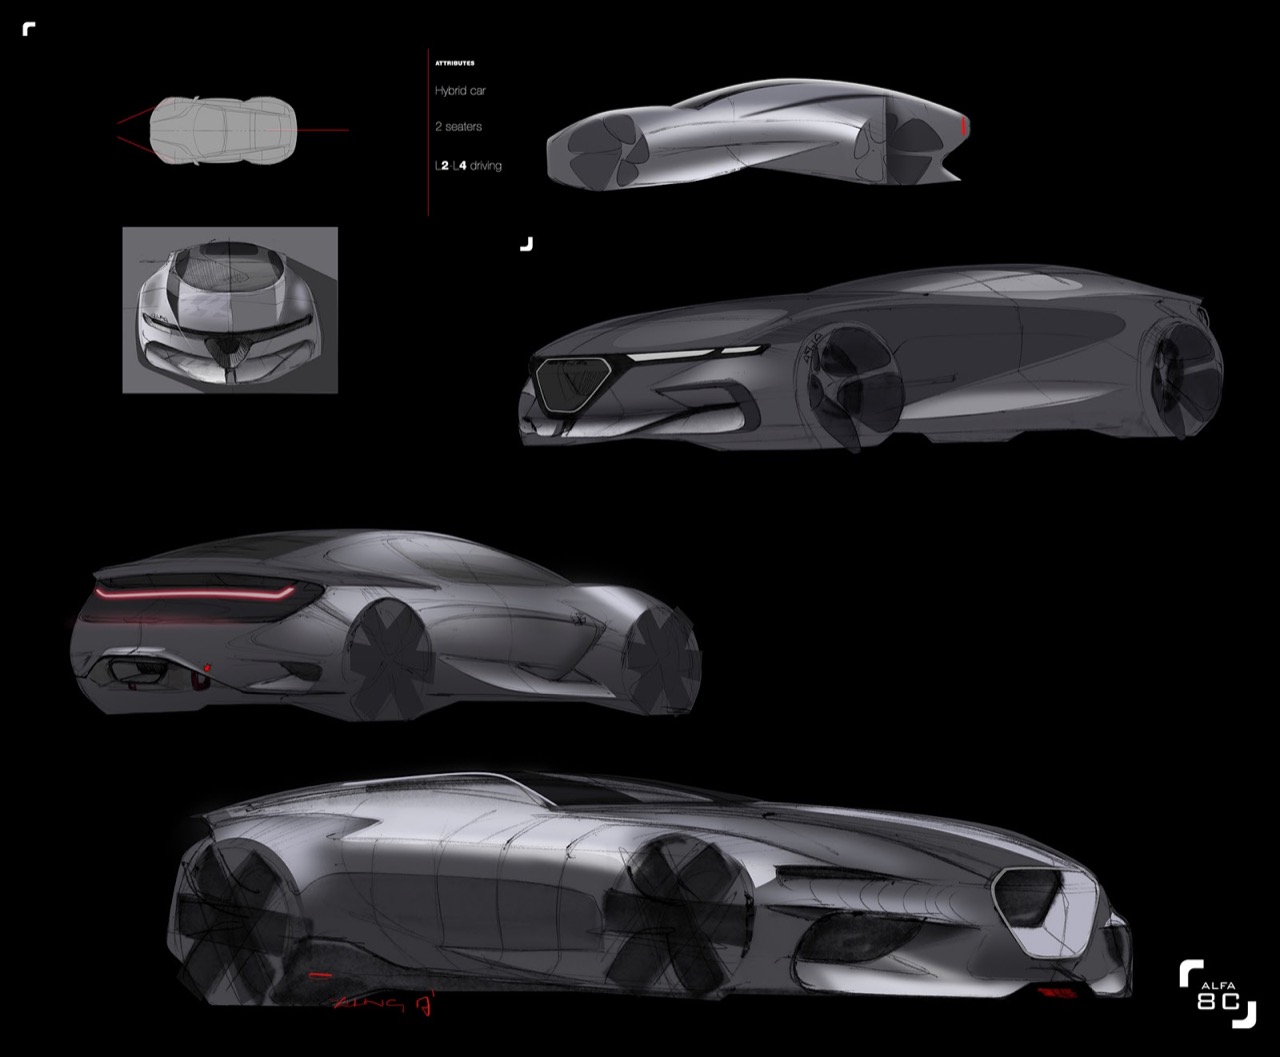 Alfa Romeo 8C - rendering by Yung Presciutti